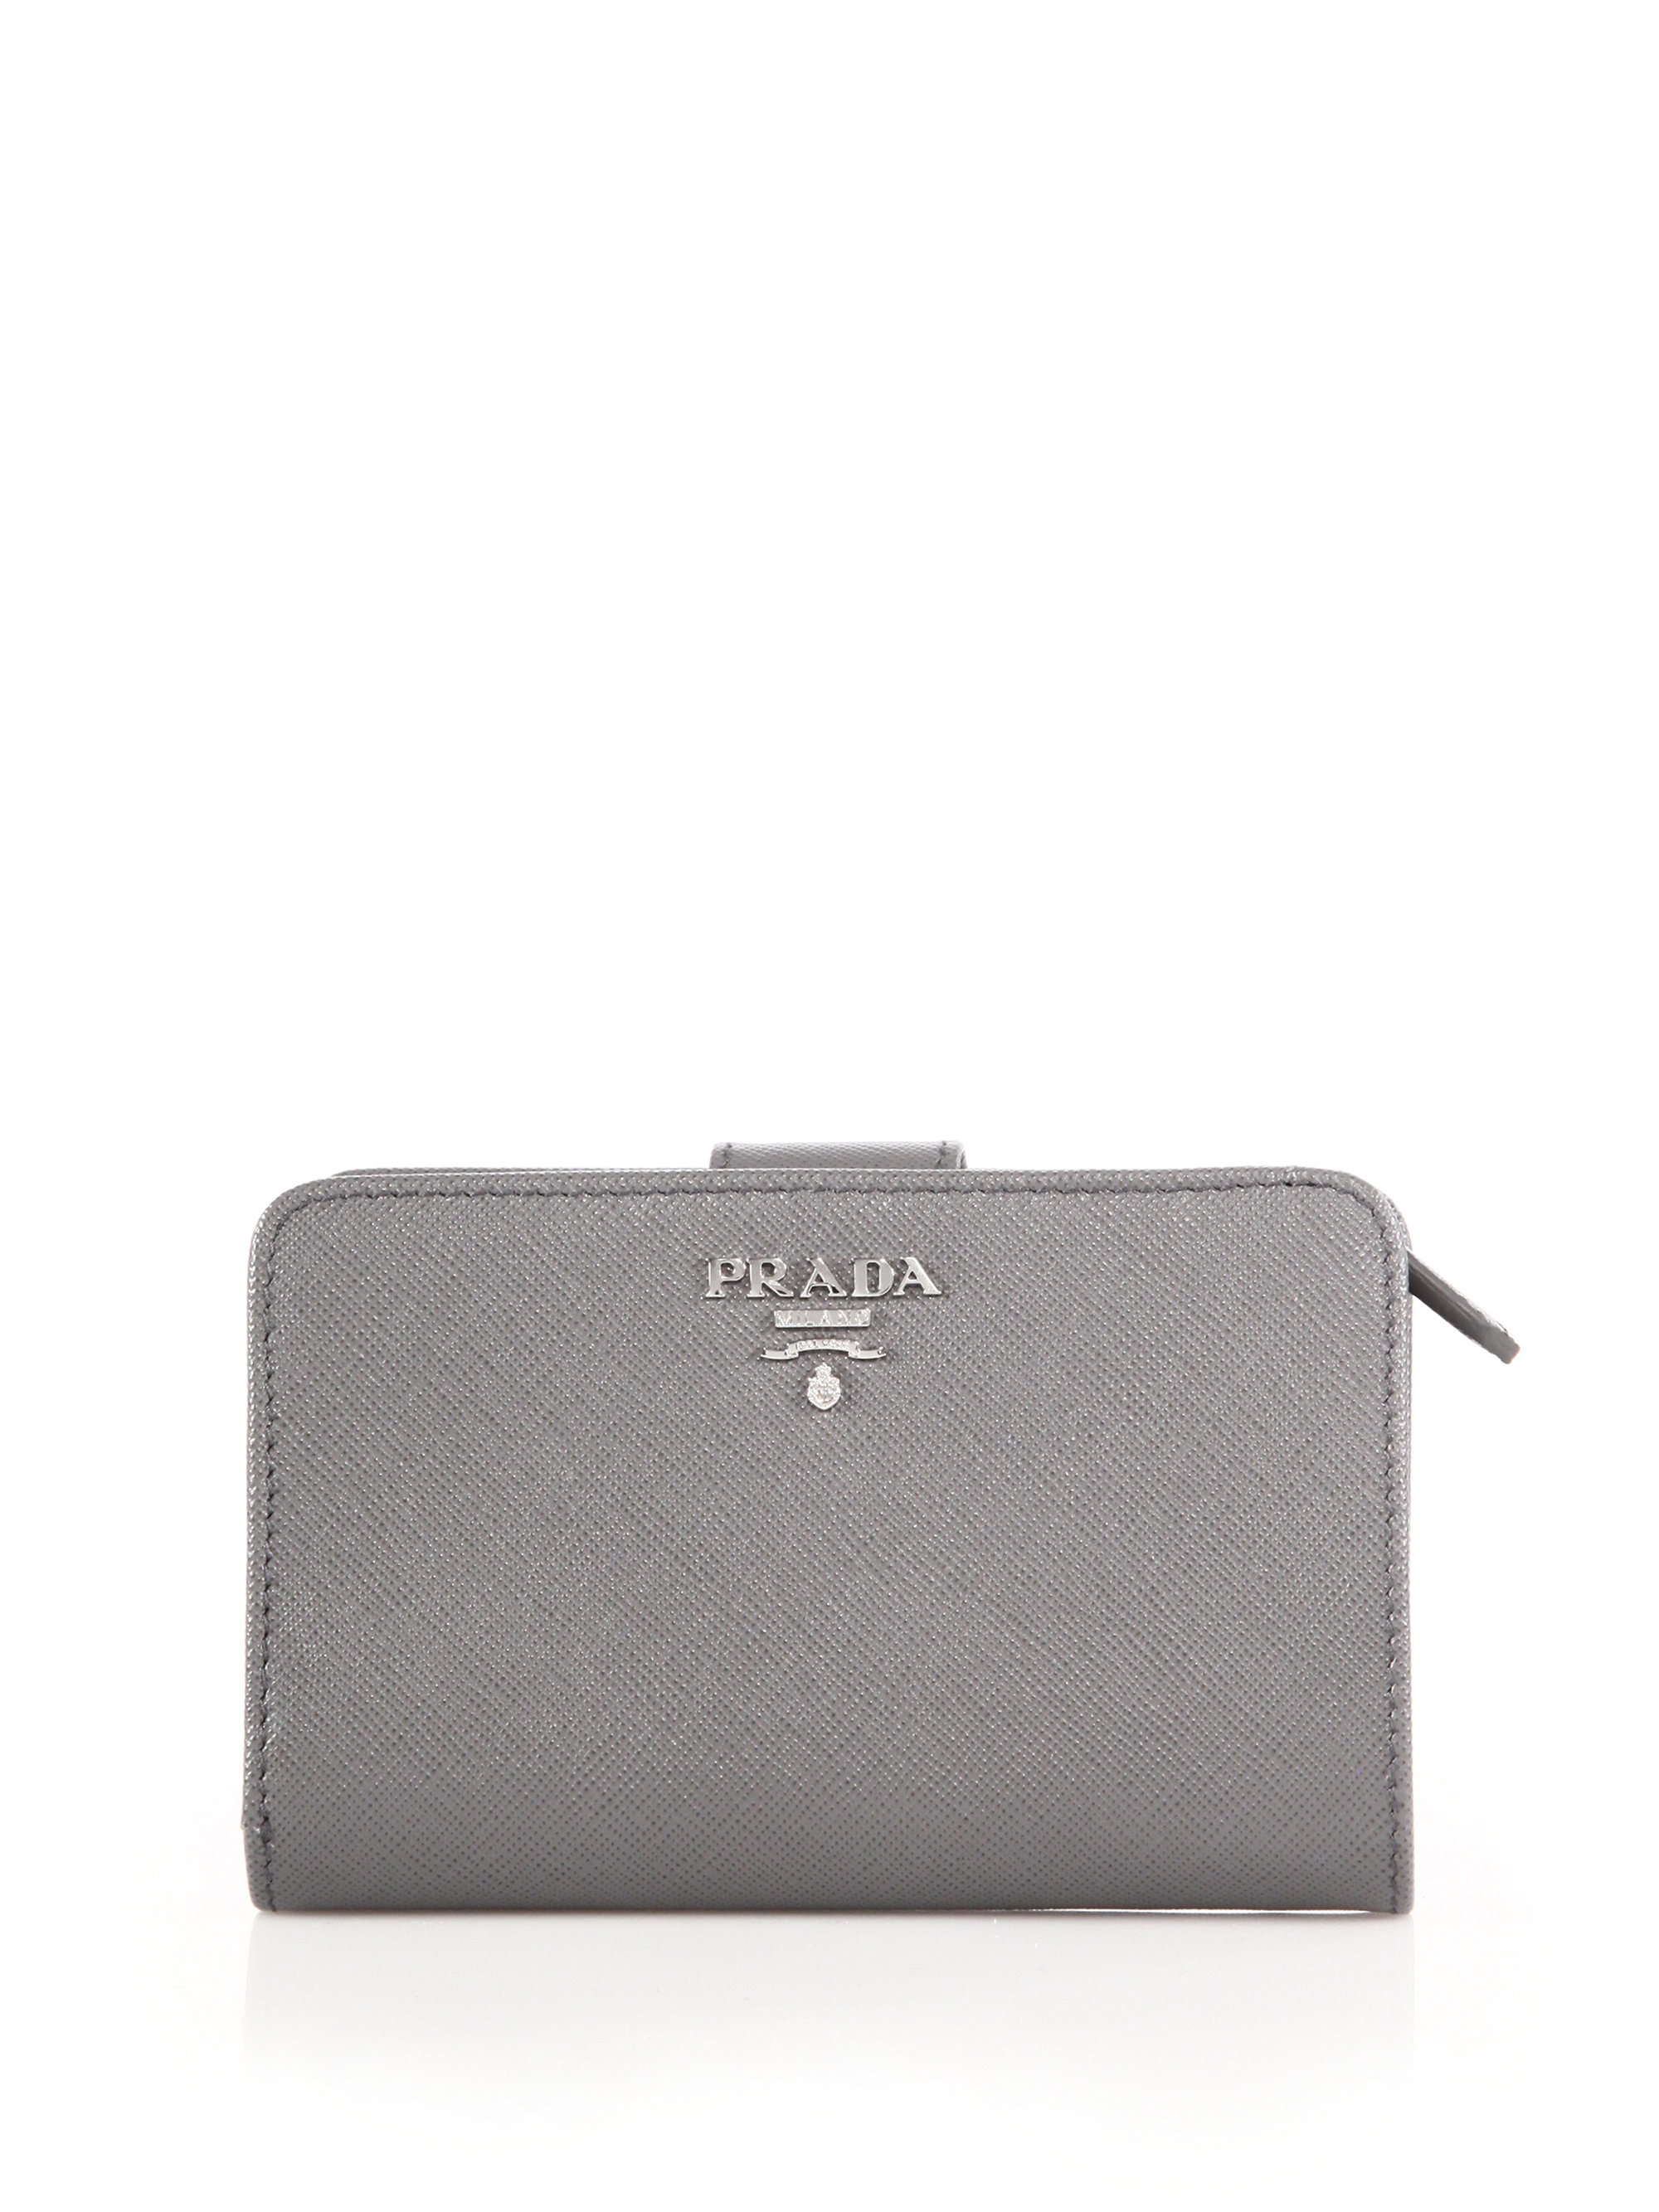 Prada Saffiano Leather Wallet in Gray | Lyst